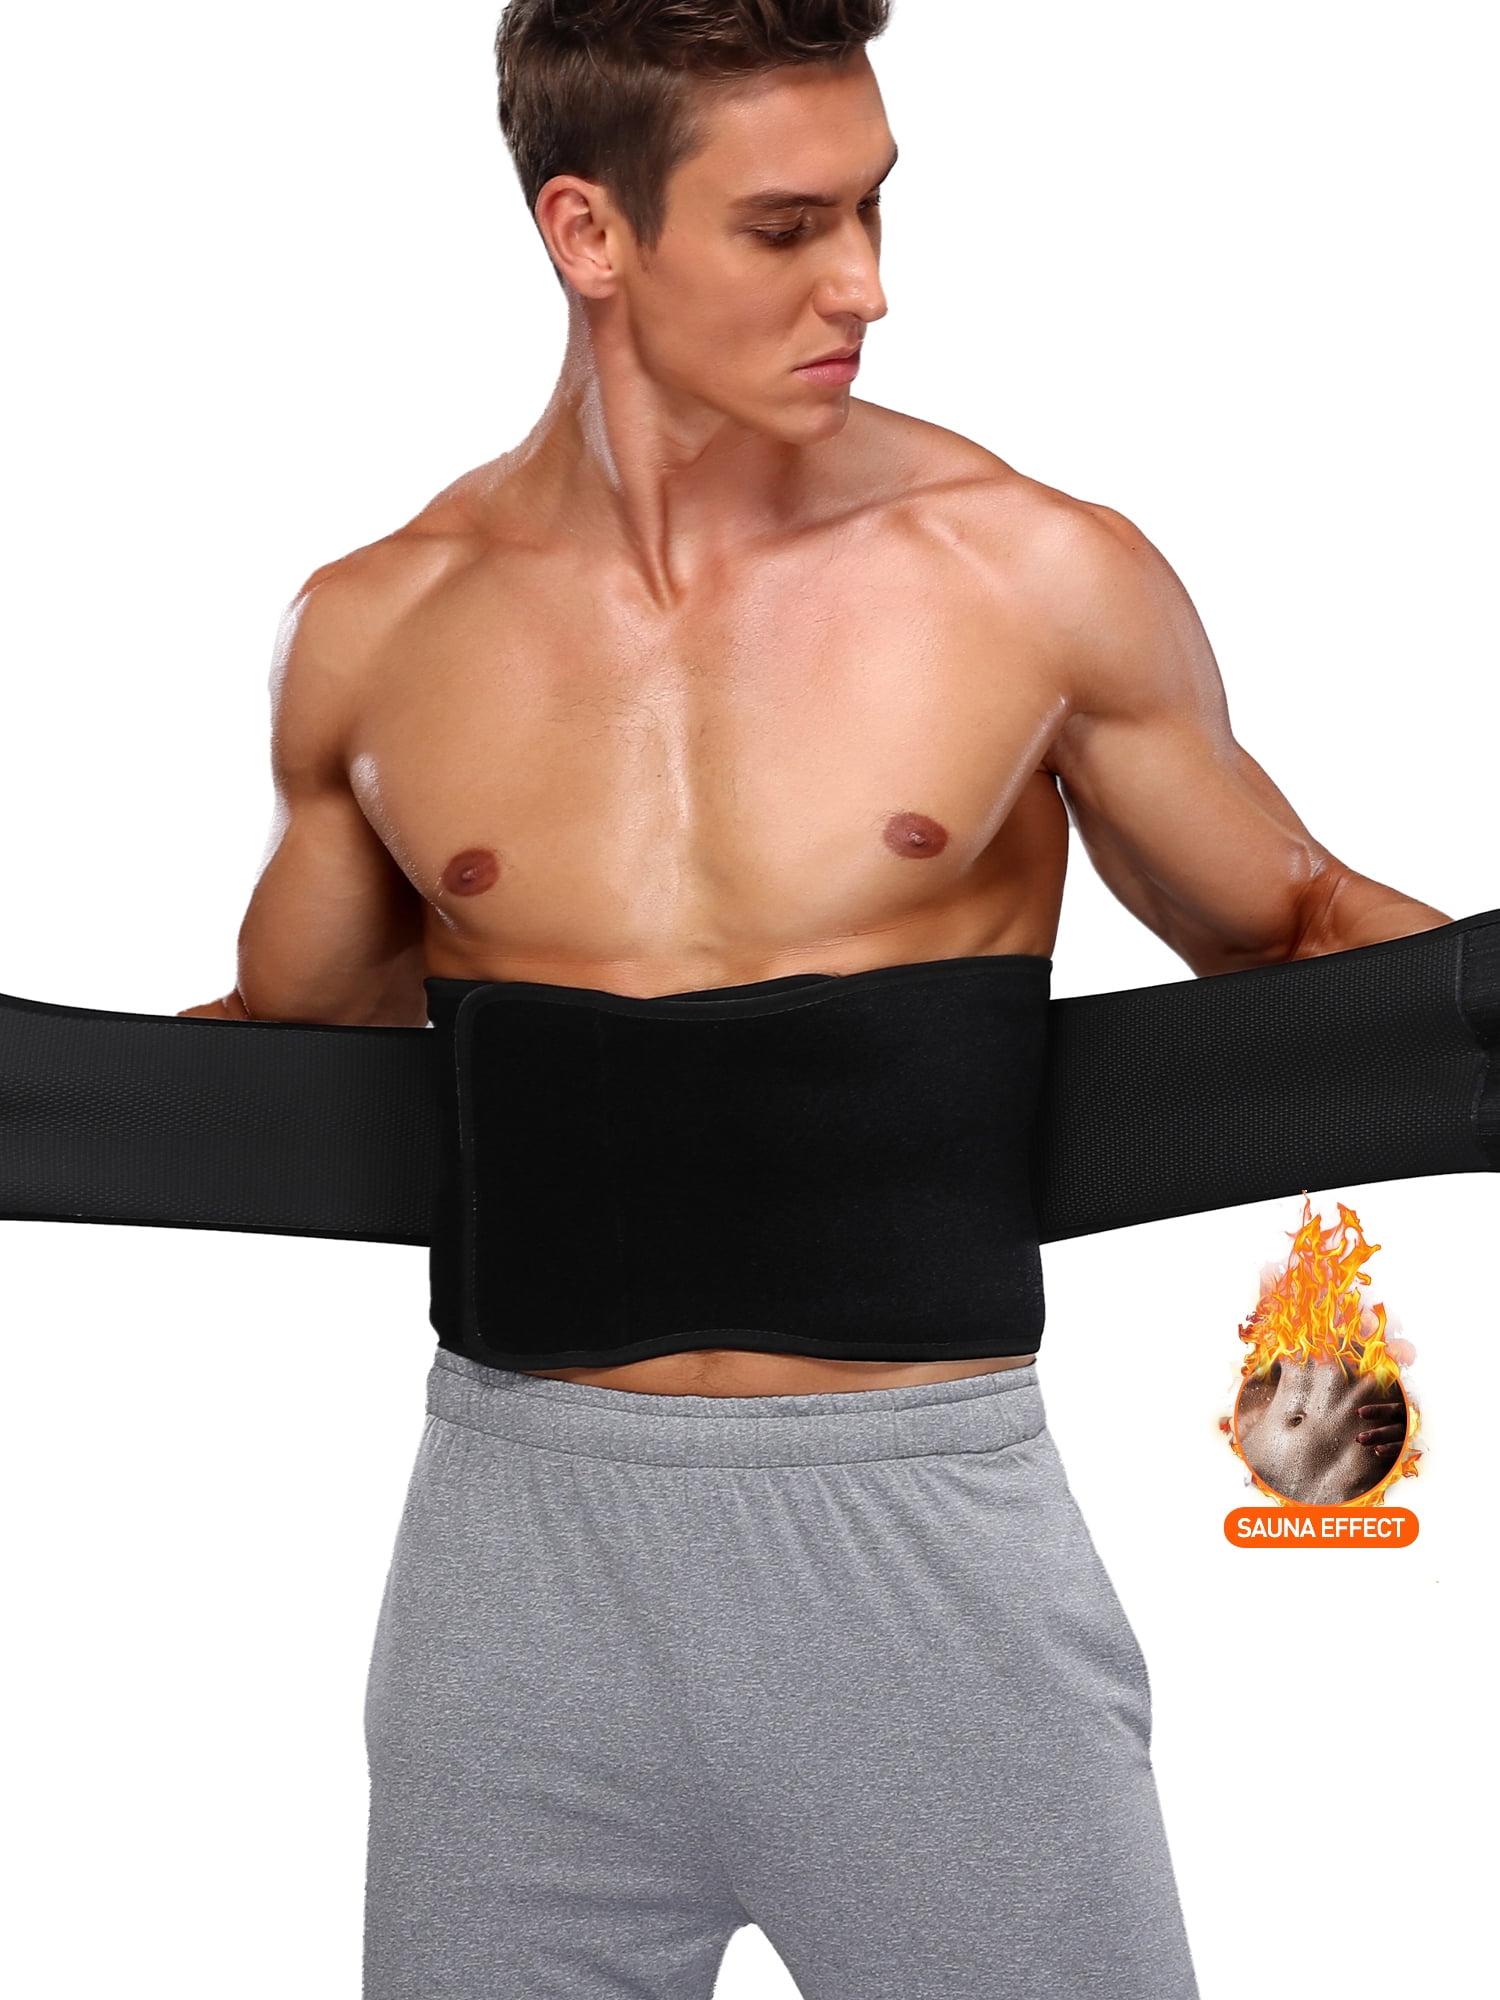 MISS MOLY Waist Trainer Belts for Women Tummy Control Workout Waist Trimmer Sweat Sauna Slimming Girdle Cinchers 